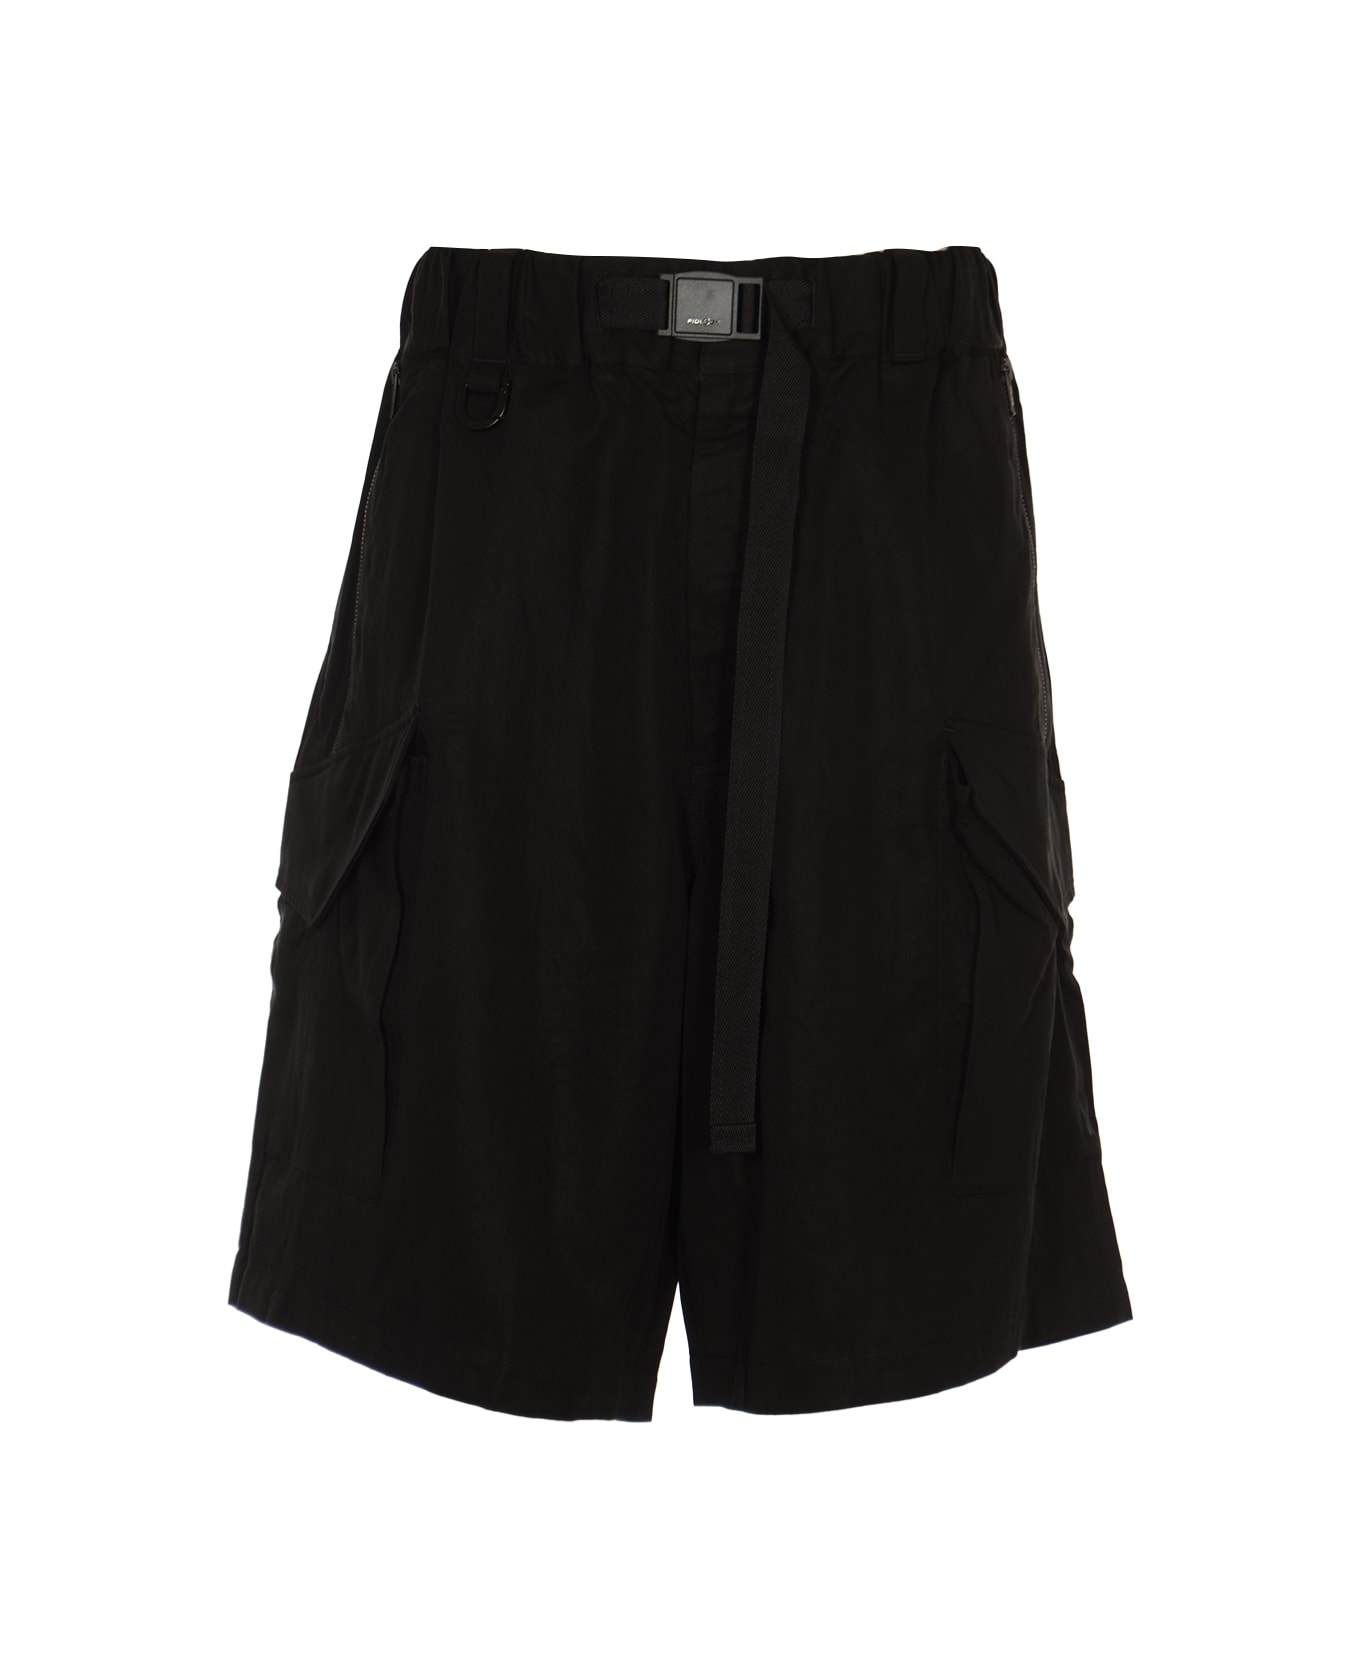 Y-3 Belted Waist Cargo Shorts - Black ショートパンツ